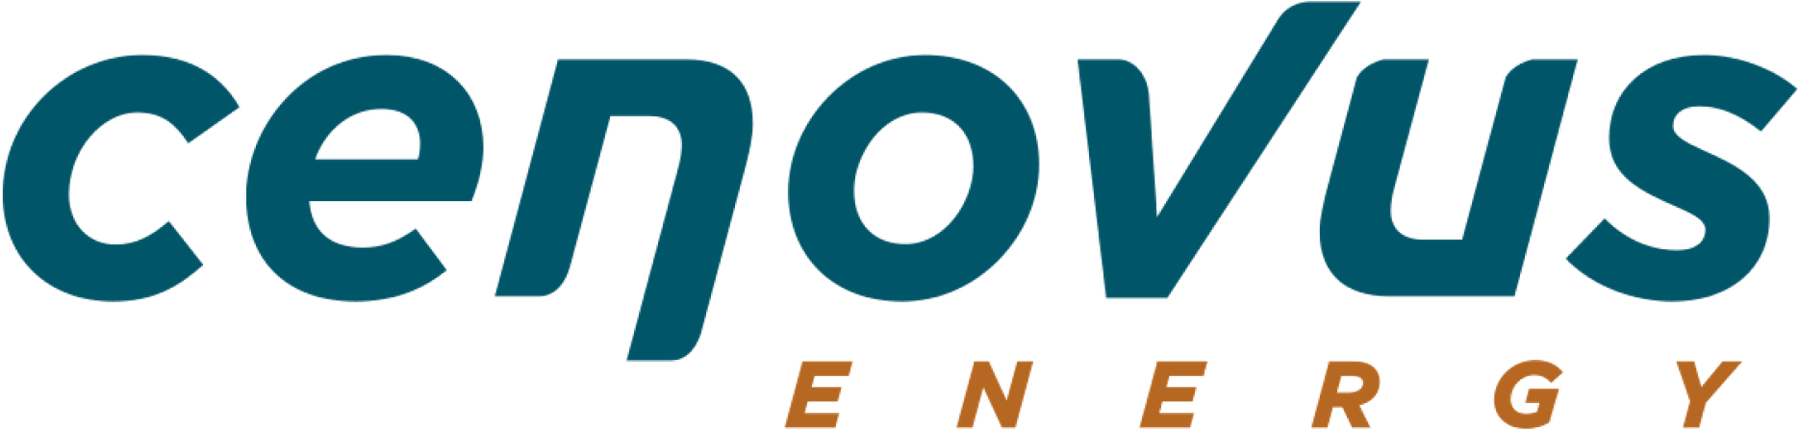 Cenovus Energy logo on a transparent background